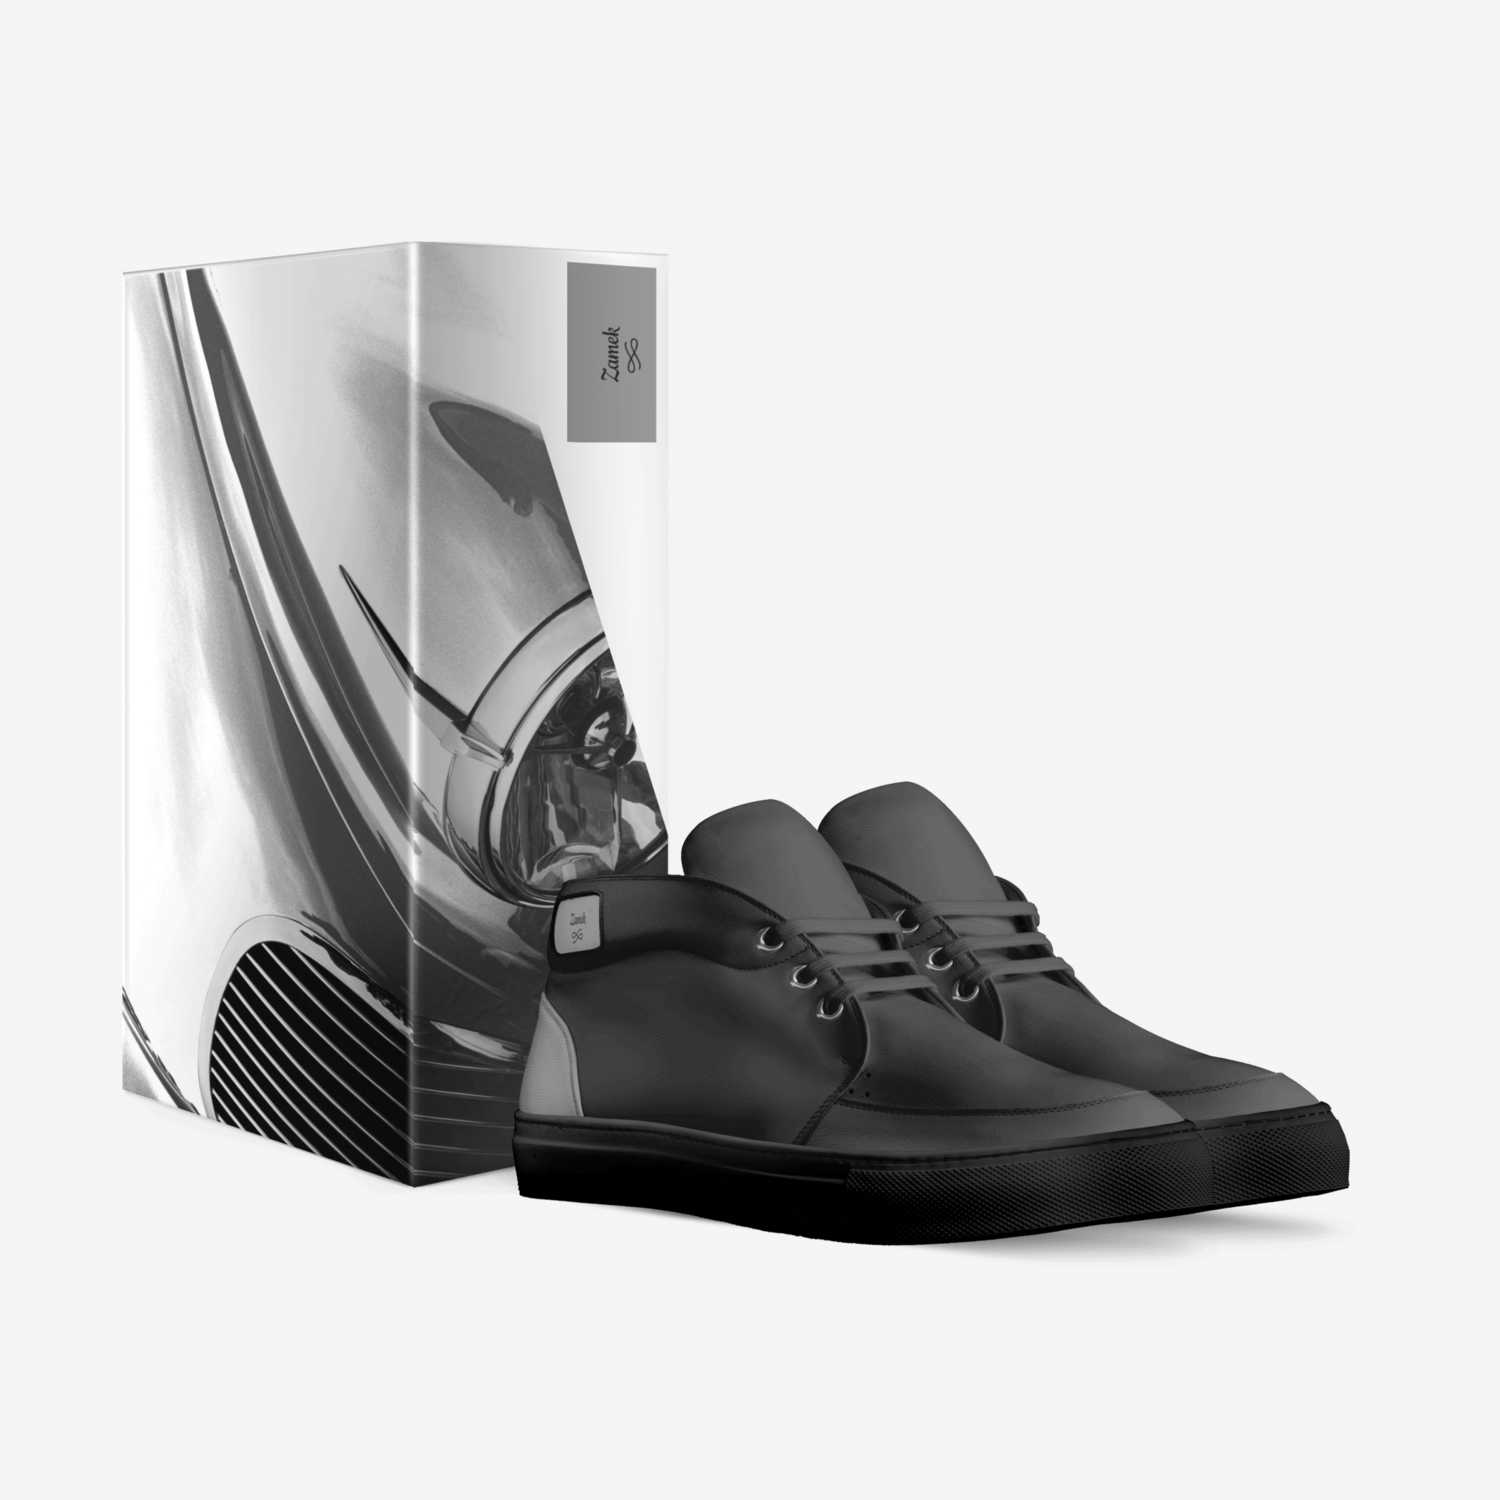 Zamek custom made in Italy shoes by Kisha Flemmings | Box view